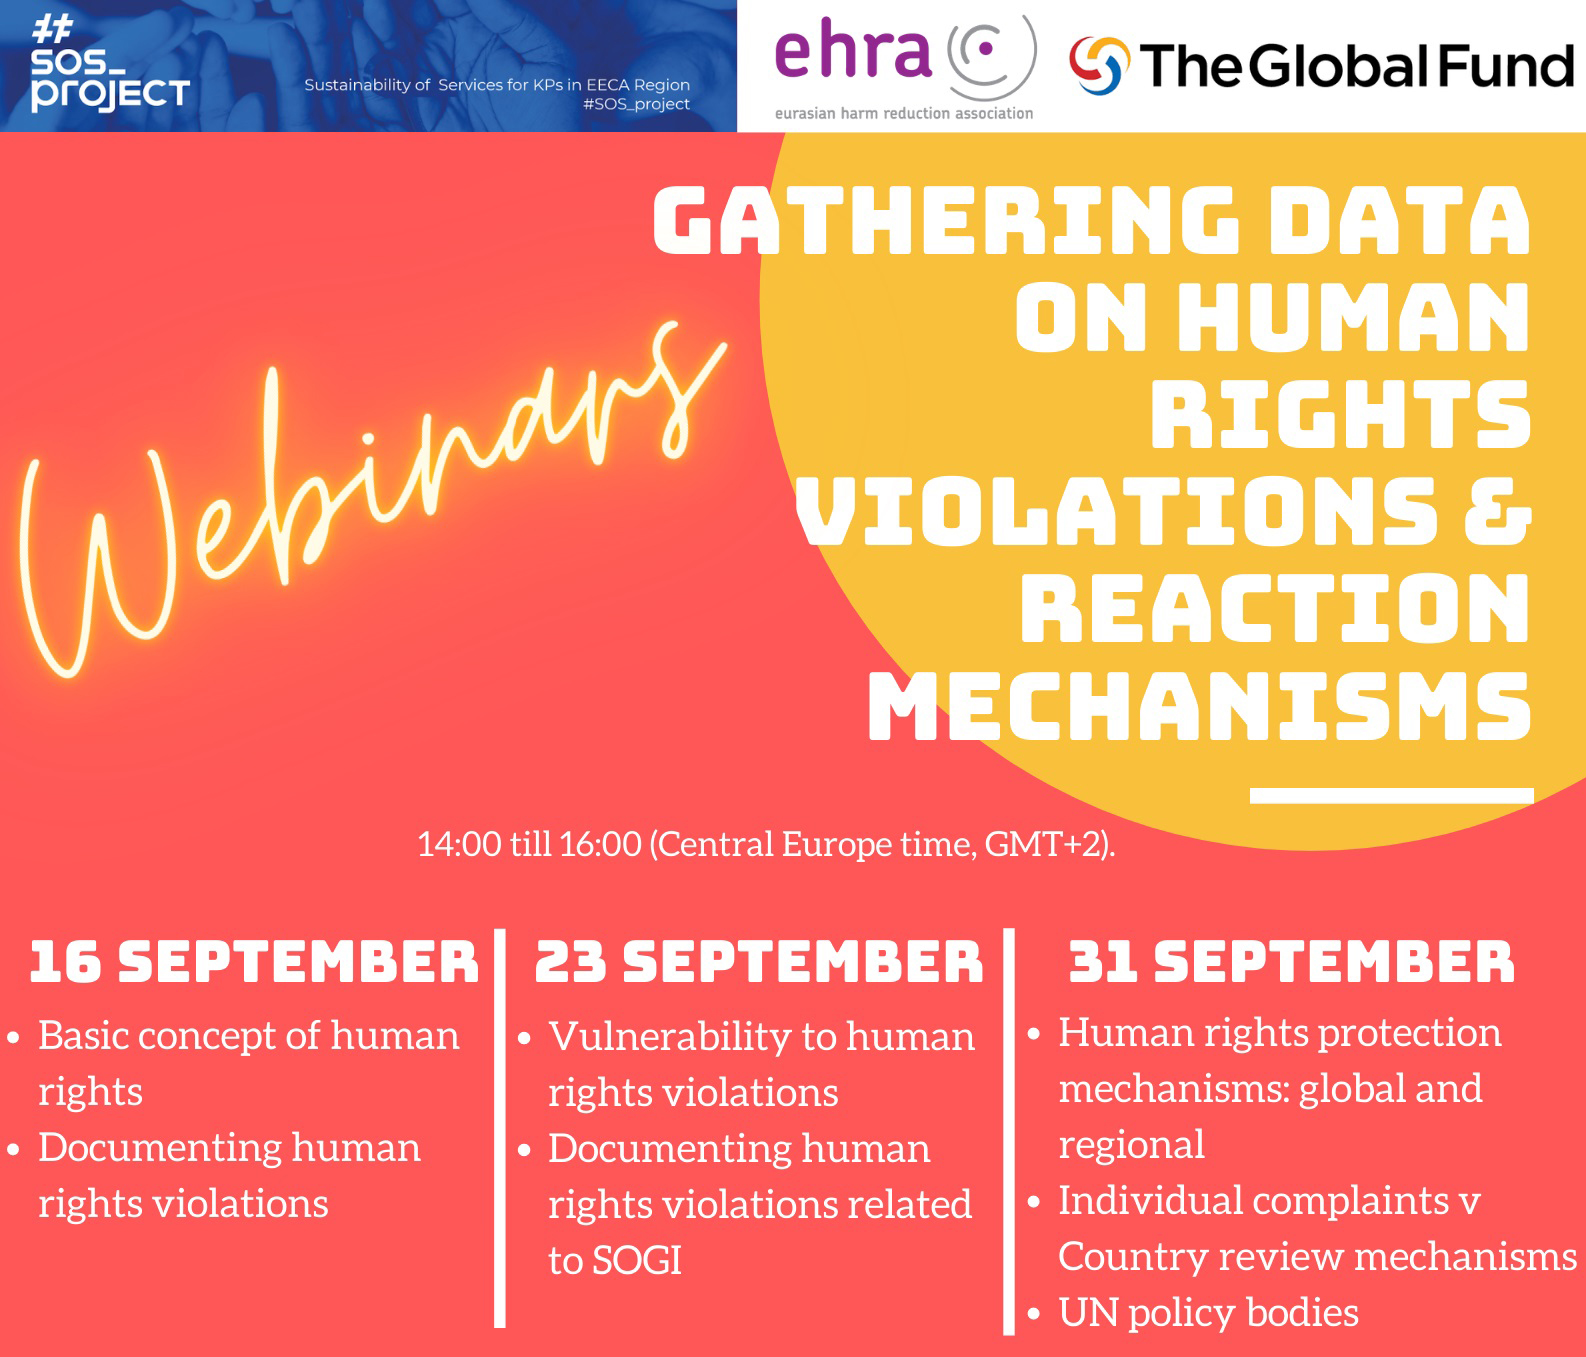 Webinars on Human Rights Violations Data Gathering